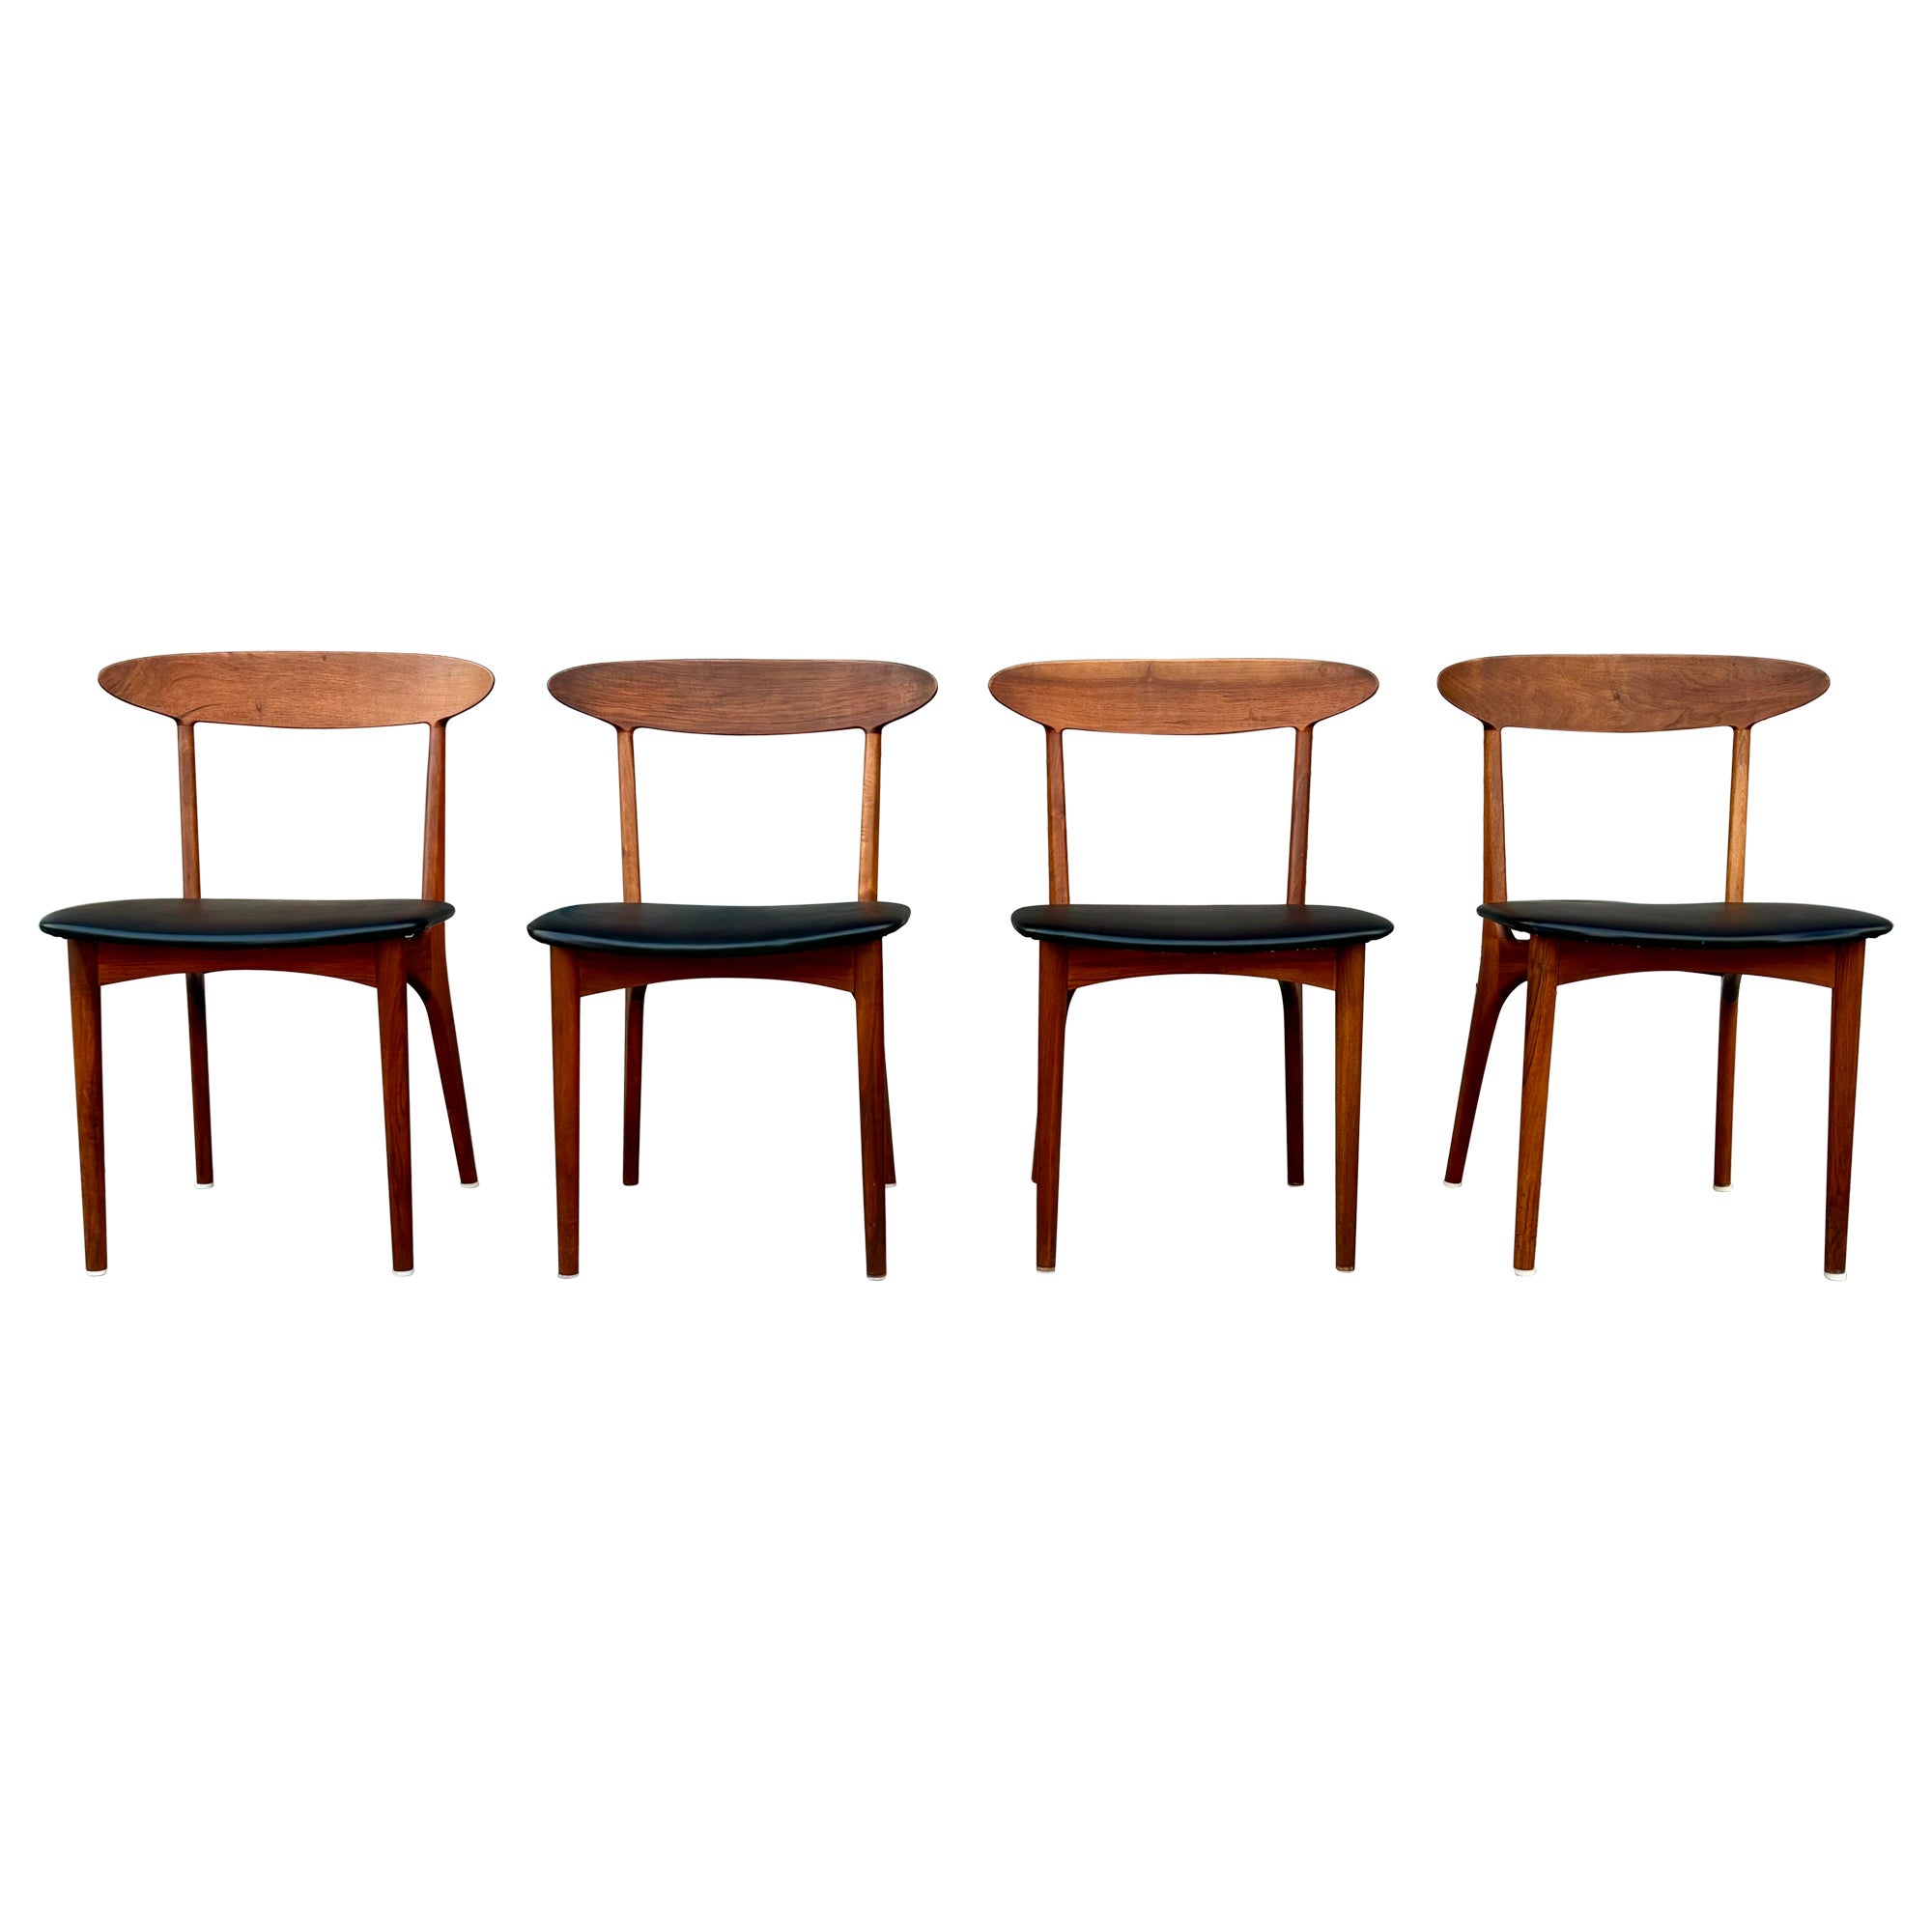 1960s Danish Modern Teak Dining Chairs by Kurt Ostervig for Brande Møbelindustri For Sale